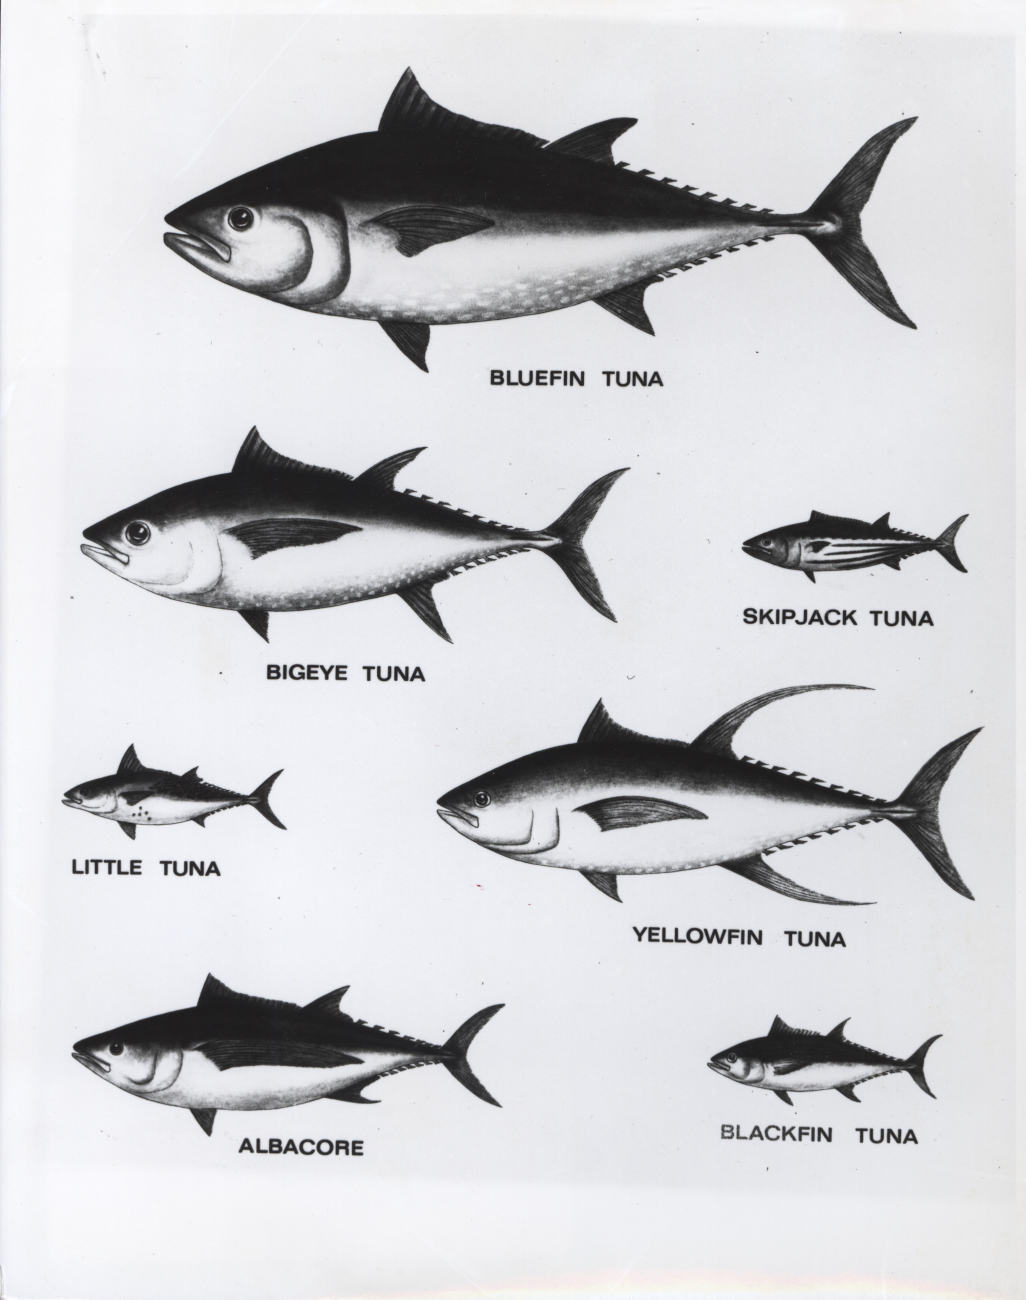 The Atlantic tunas under study at the Tropical Atlantic Biological Laboratory